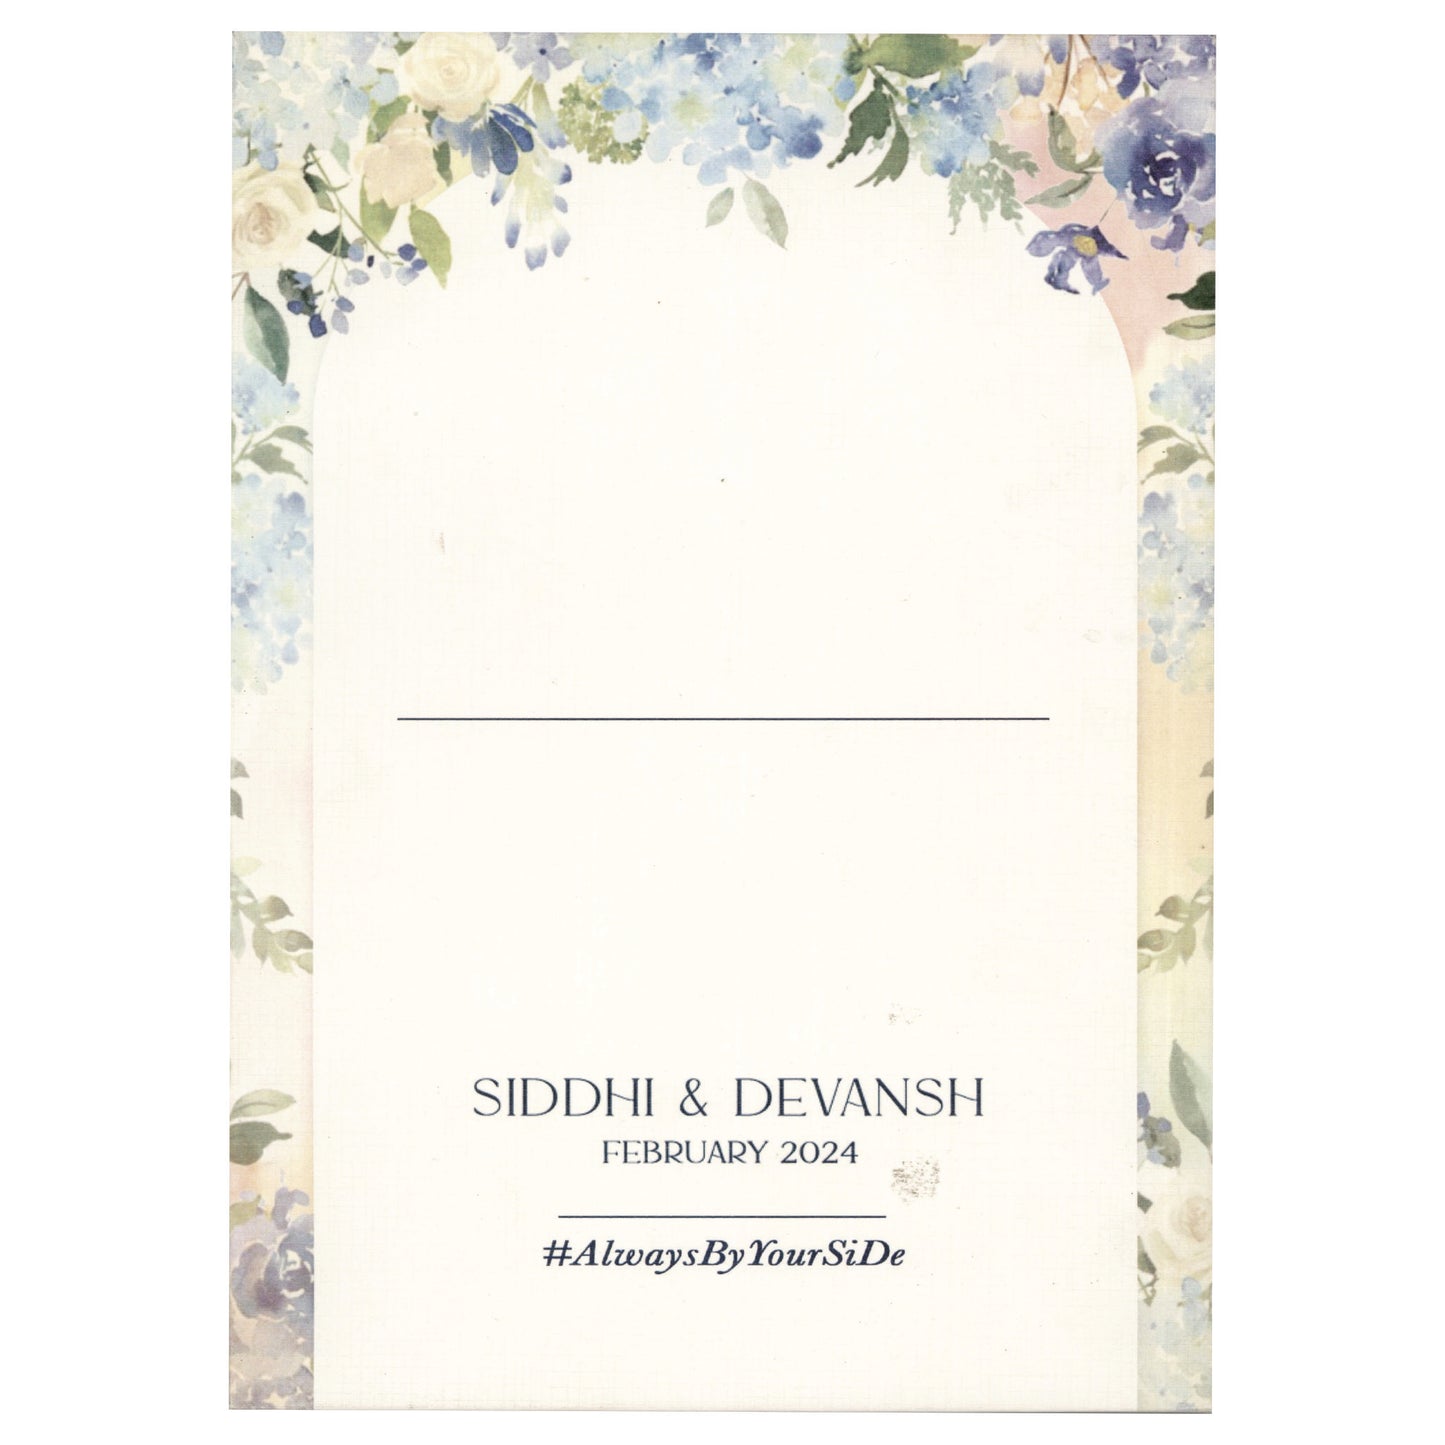 Floral Theme Wedding Invitation | SS - 5003